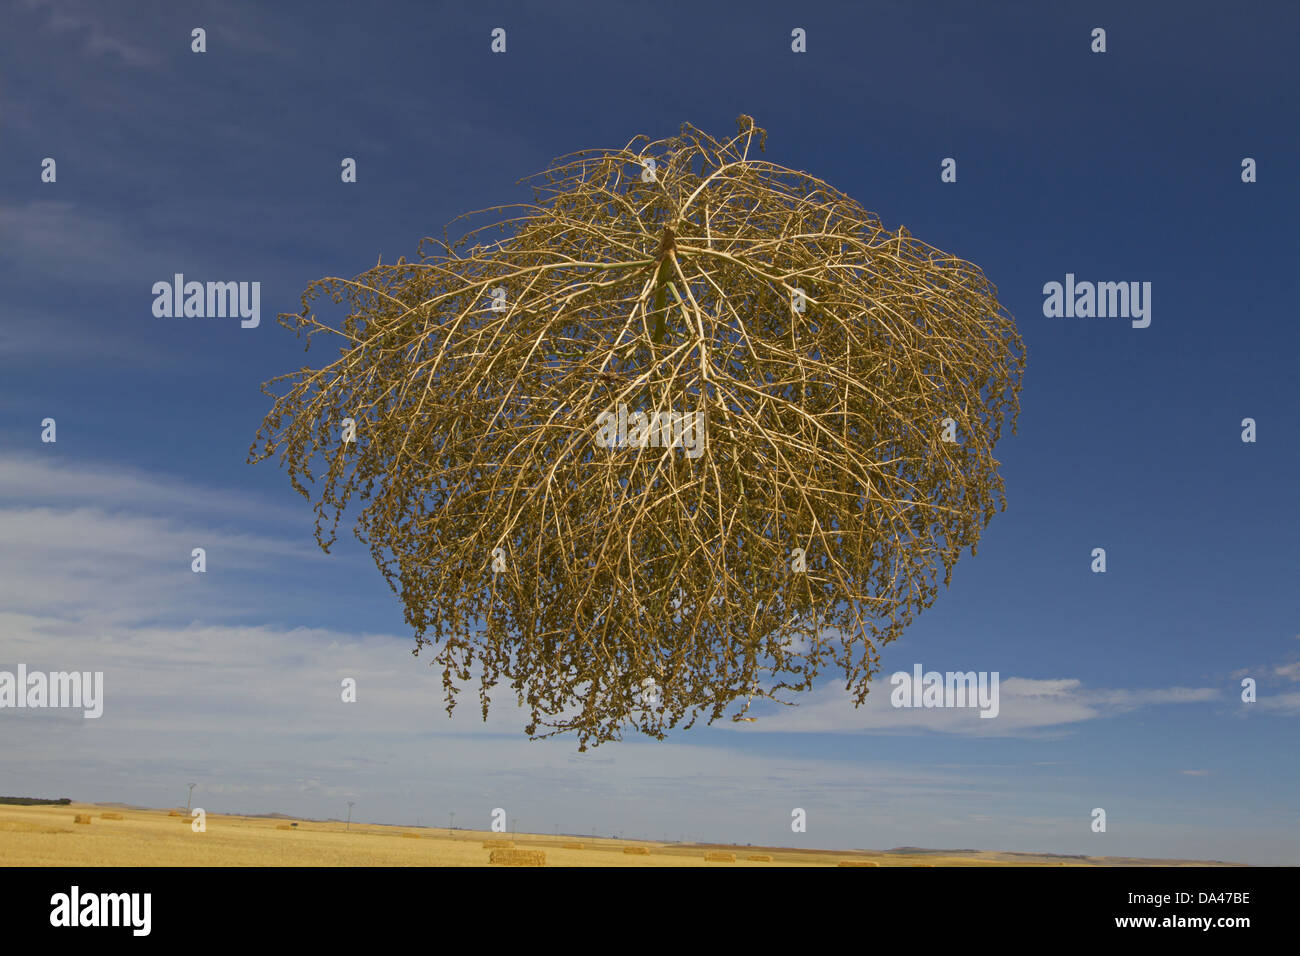 Tumbleweed (Salsola tragus) windblown dried plant, in mid-air over farmland, Spain, August Stock Photo